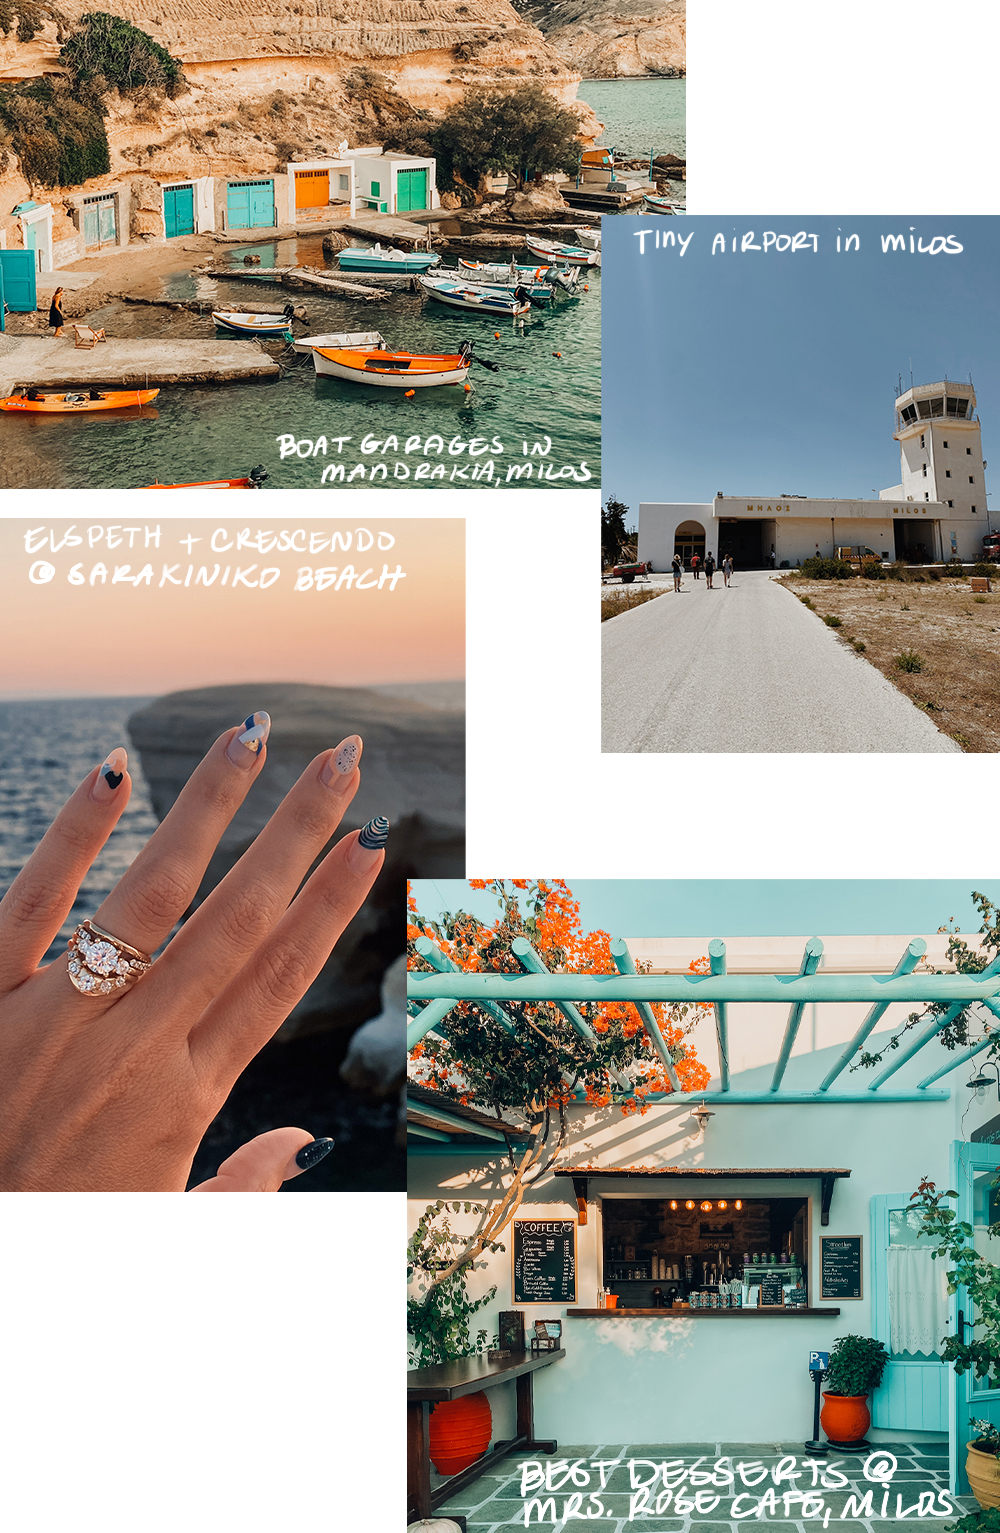 milos island greece travel guide